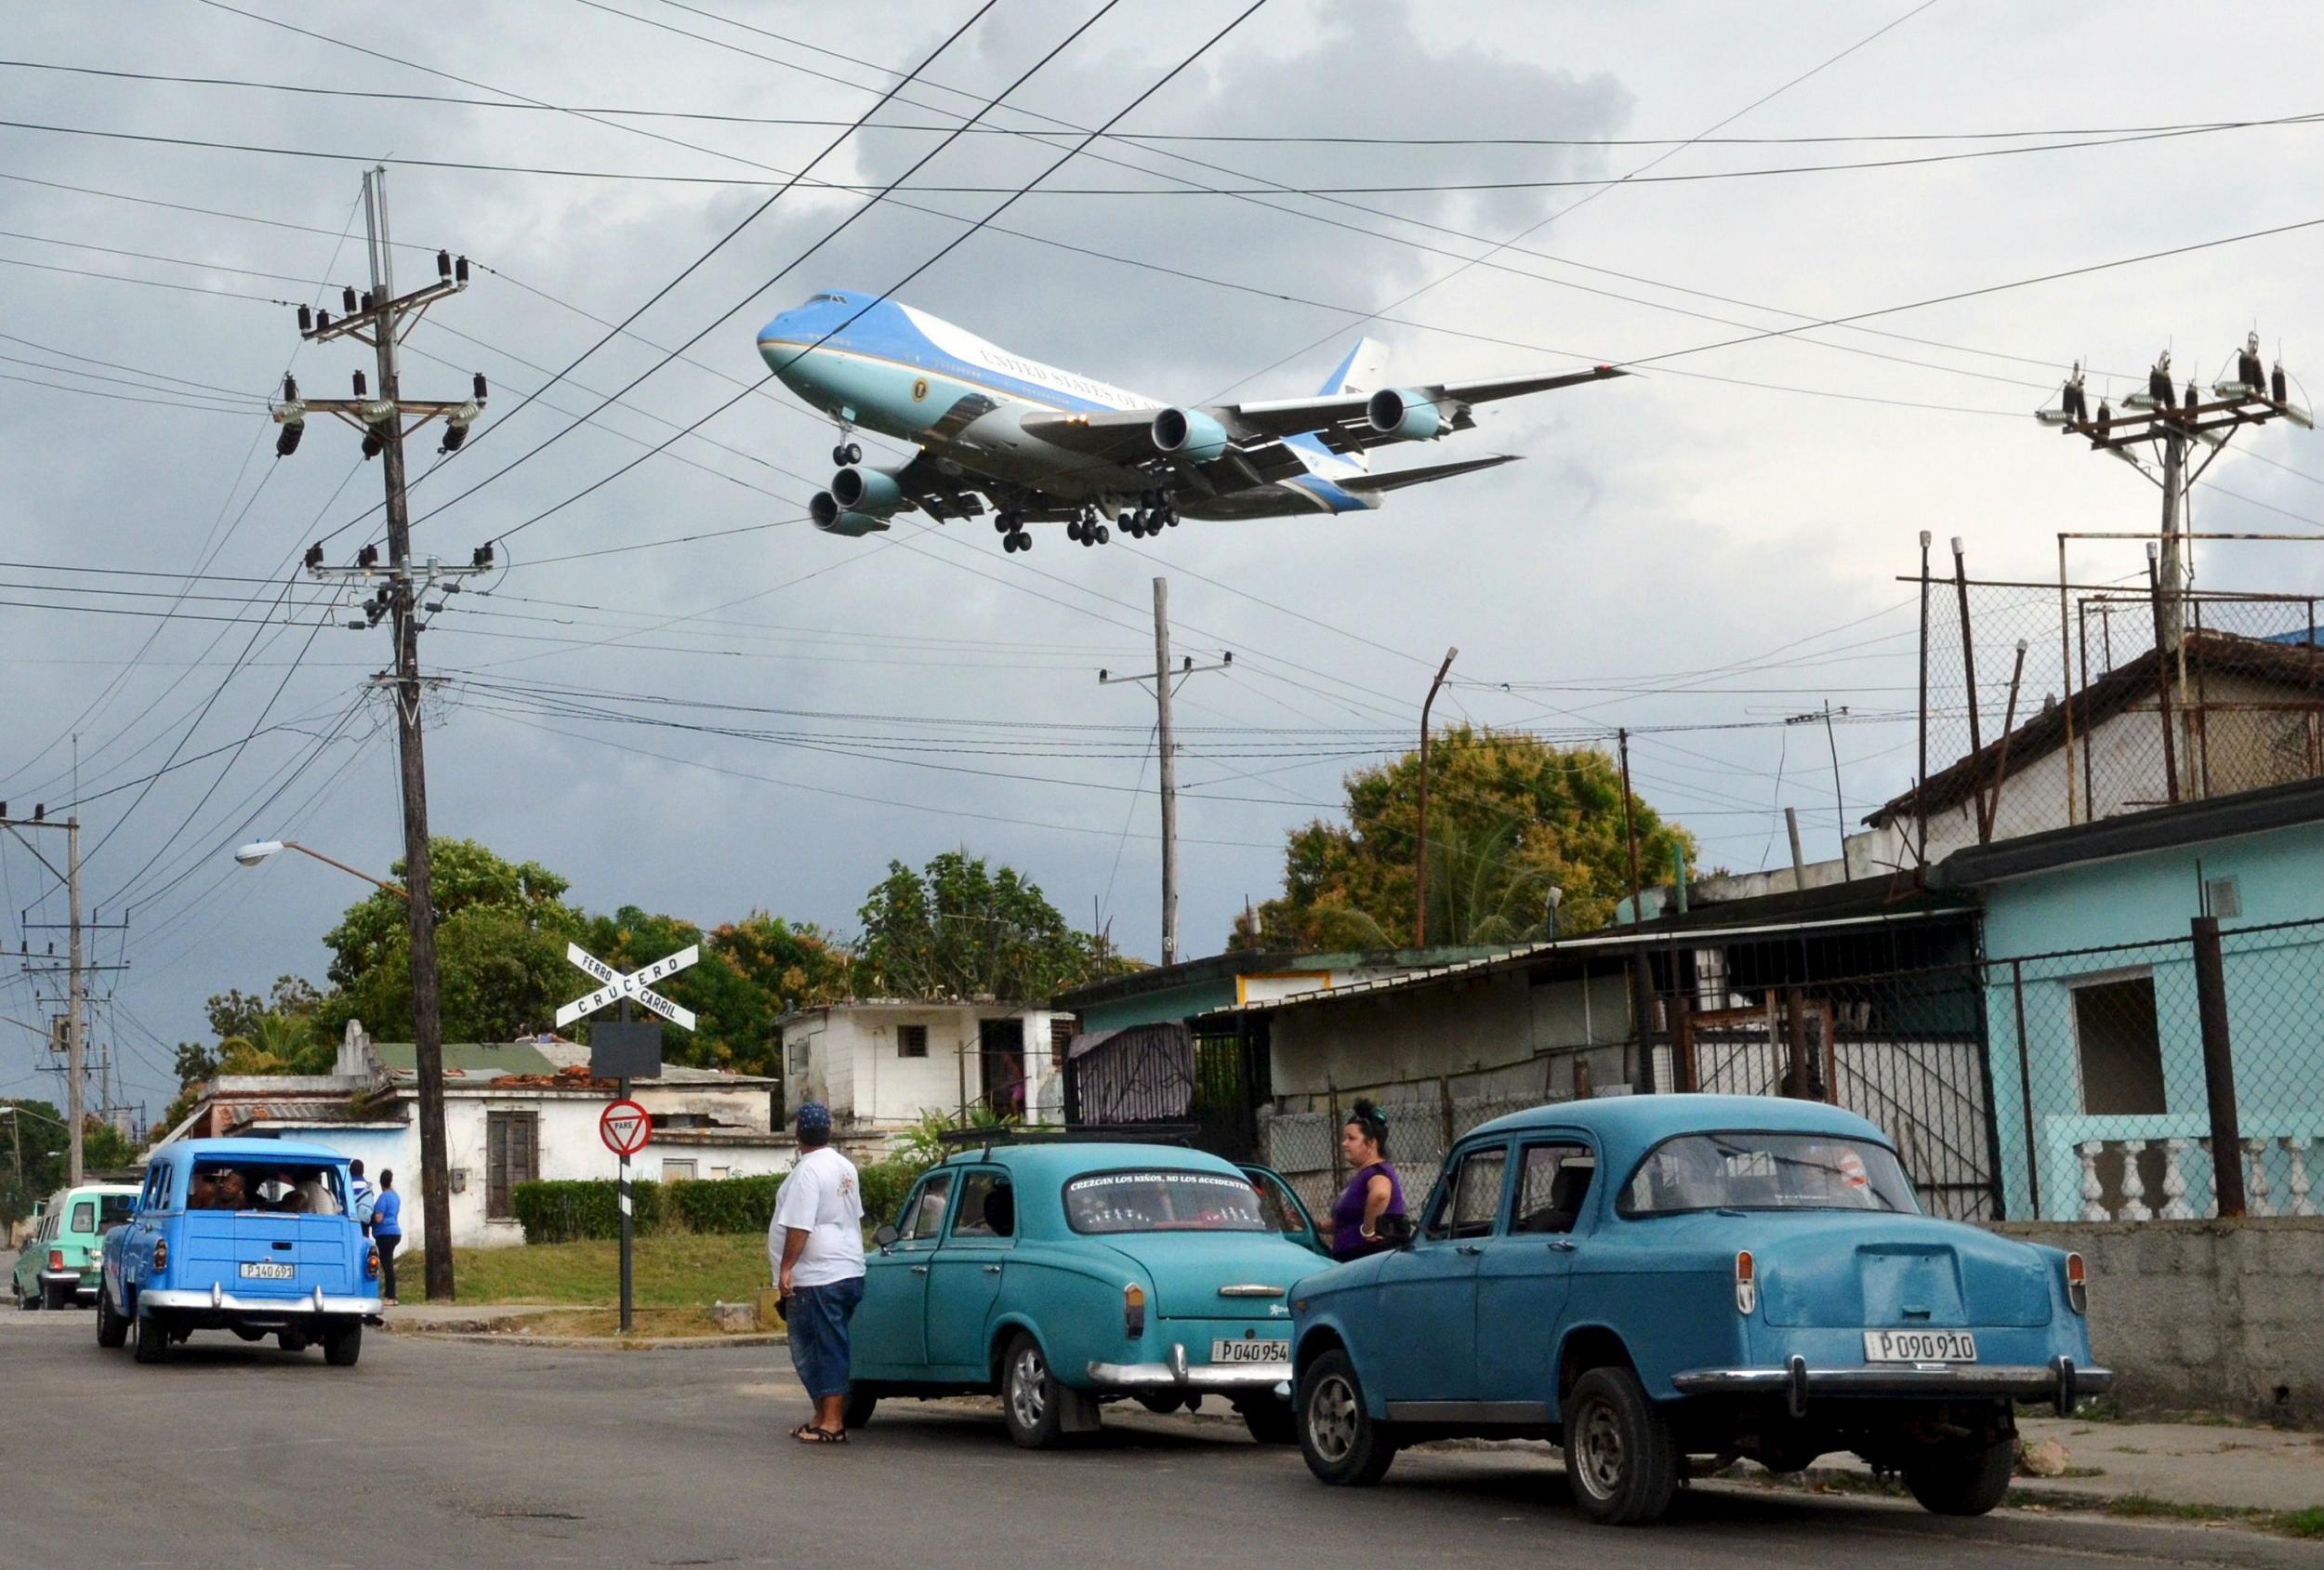 The presidential aircraft carrying Barack Obama flies over a neighbourhood in Havana